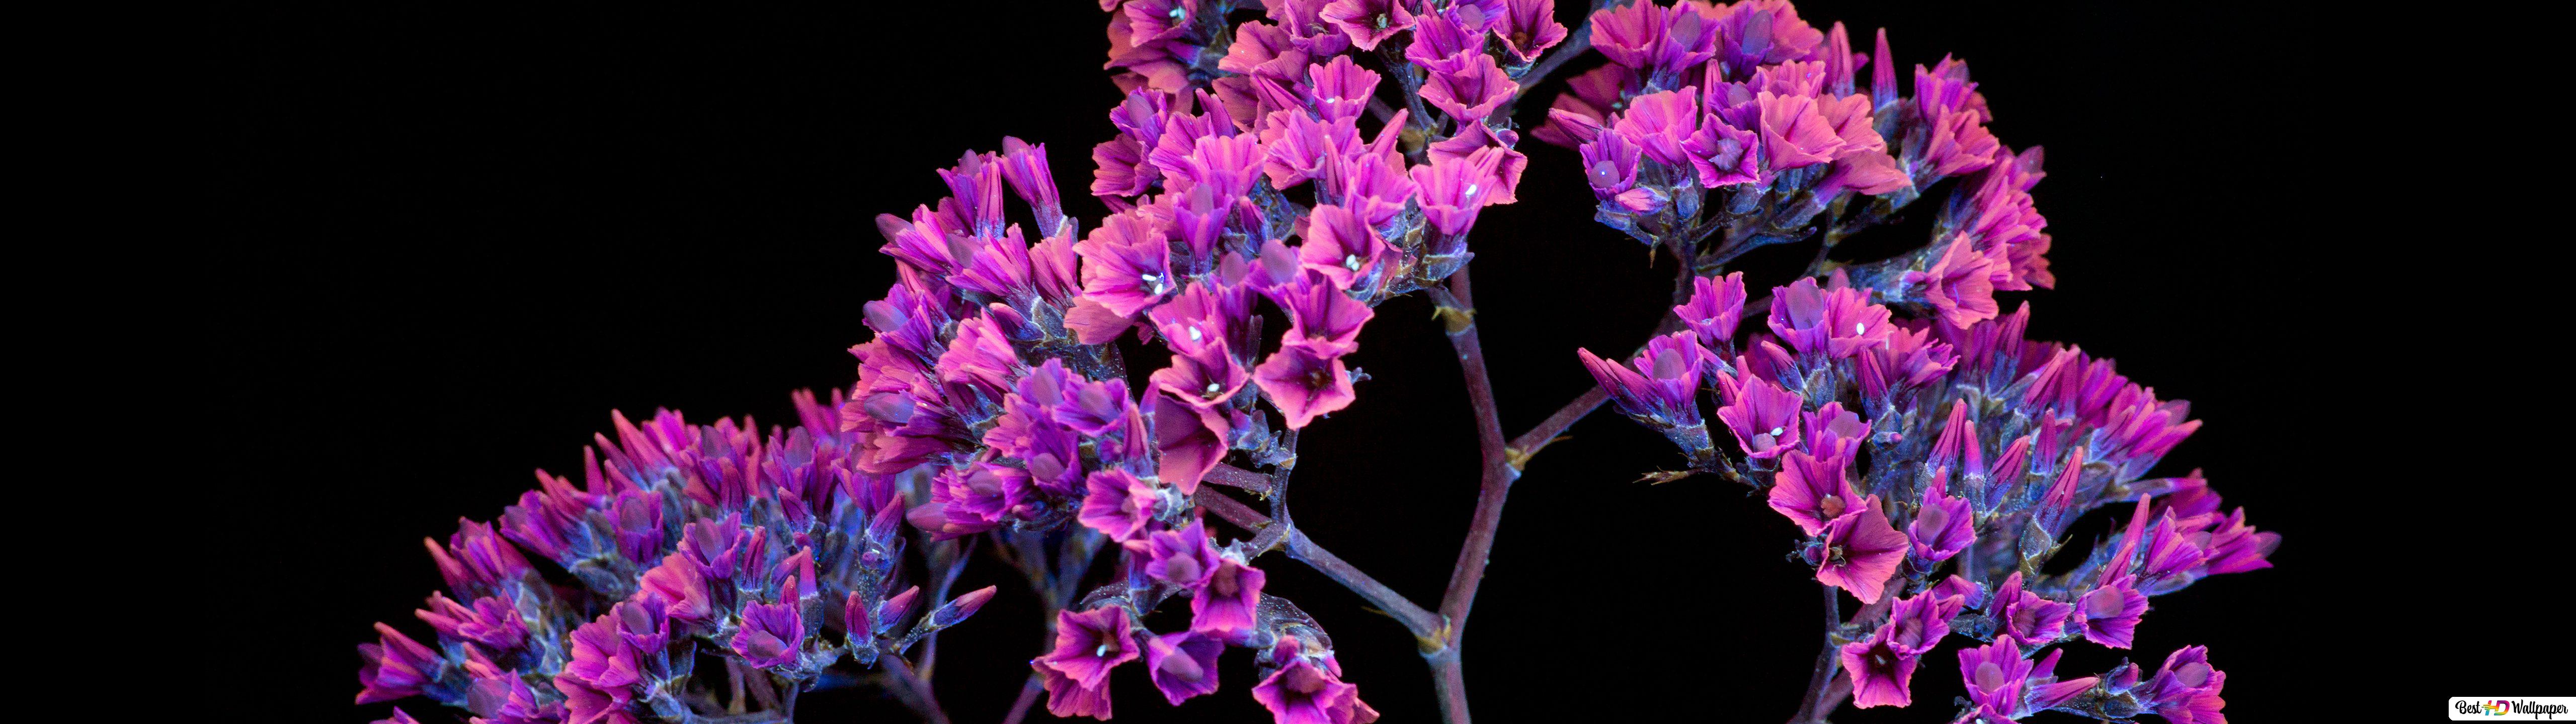 Purple Crocus Flowers HD Wallpaper